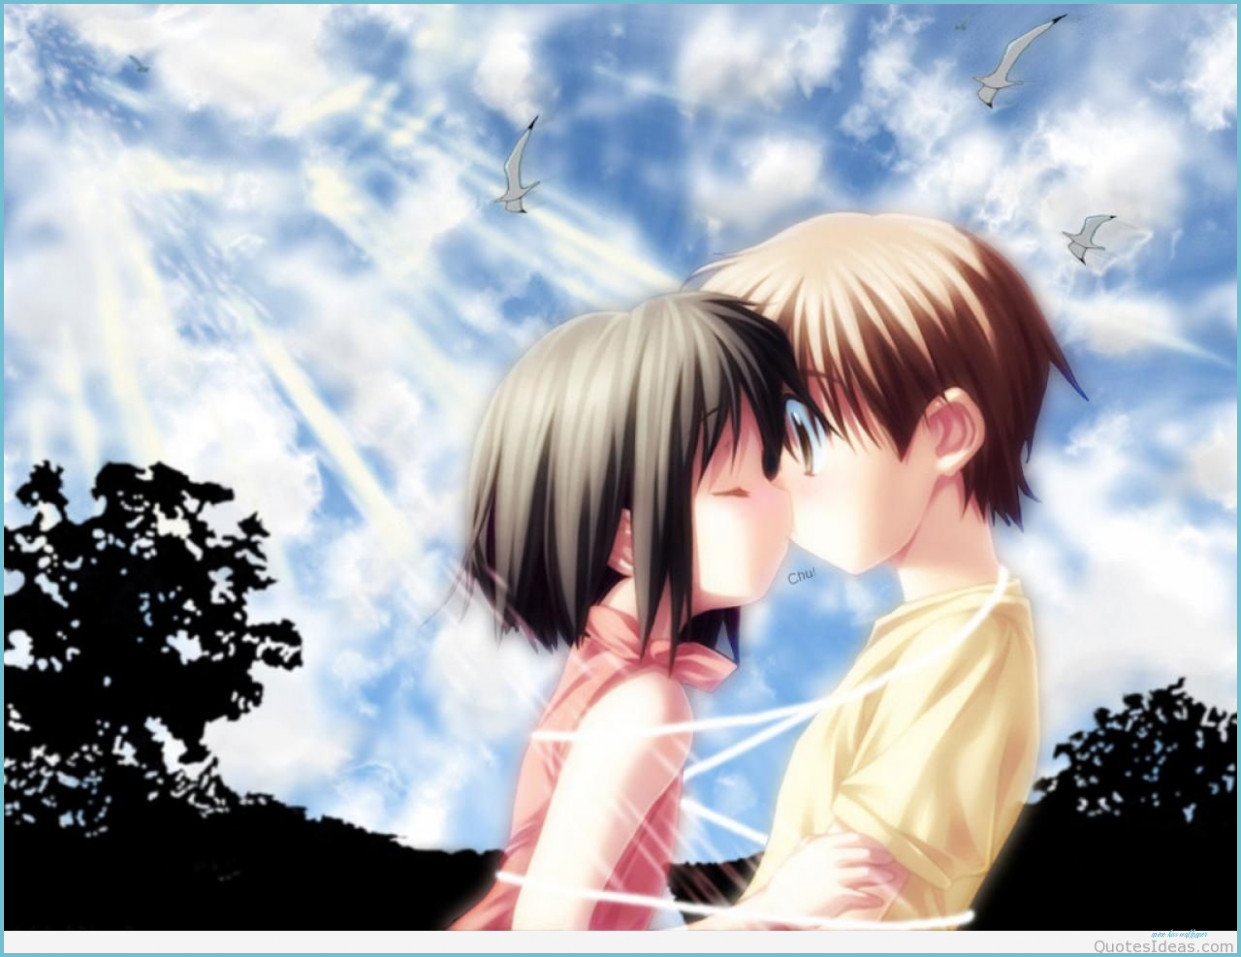 And Anime Couples Cute Love Wallpaper HD Image Dark Anime Kiss Wallpaper